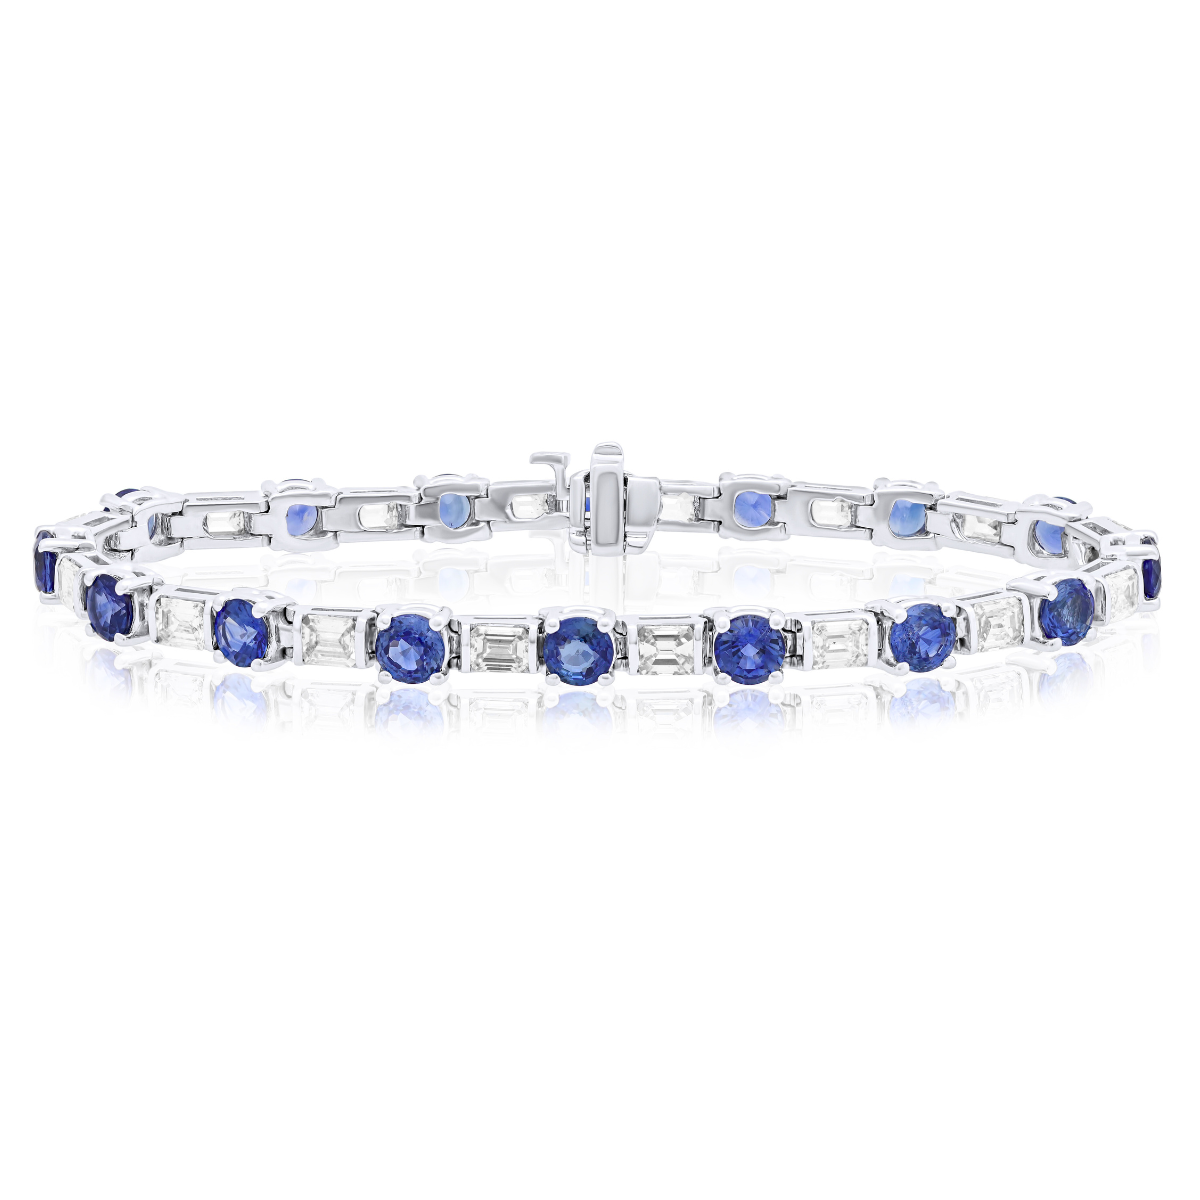 5.90cts Sapphire Diamond Tennis Bracelet